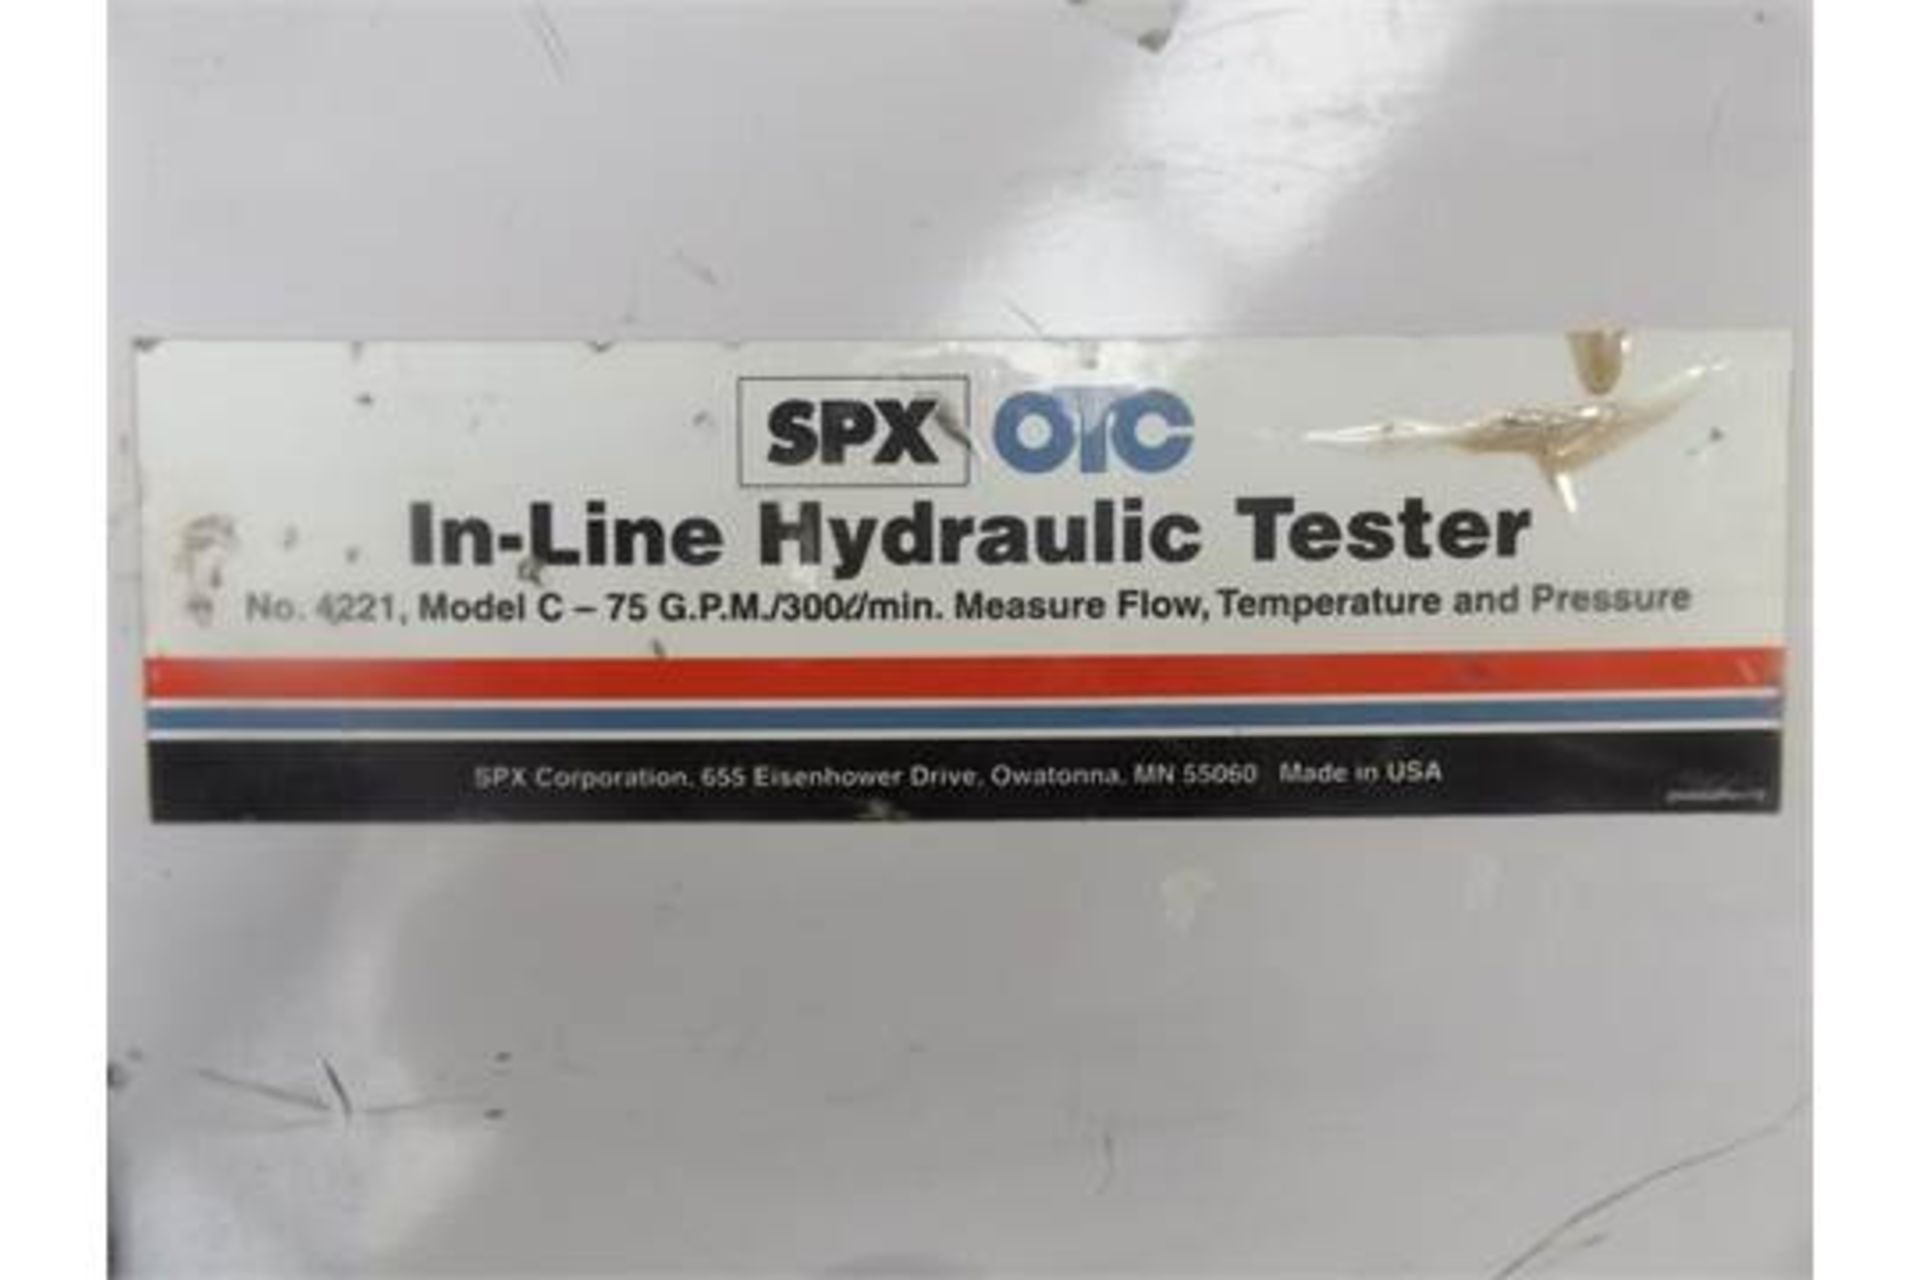 SPX / OTC In-Line Hydraulic Test Kit No. 4221 Model C-75 - Image 8 of 9